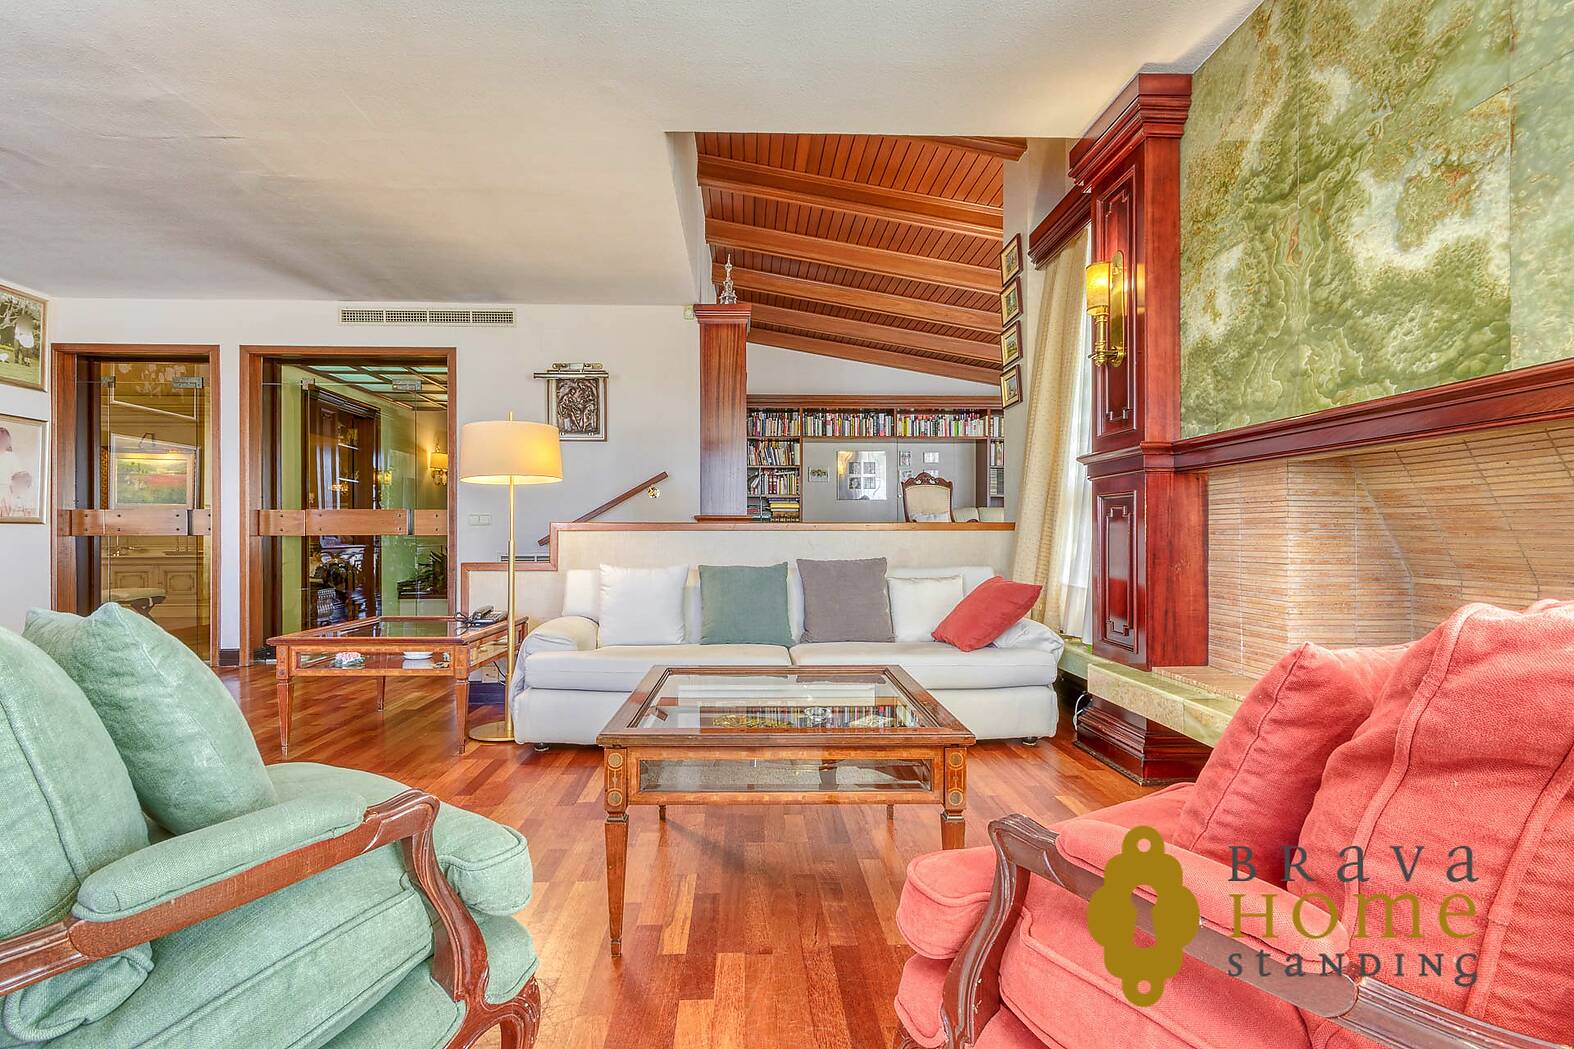 Exklusive Villa in Strandnähe, ideal für Investitionen,  in Rosas-Costa Brava